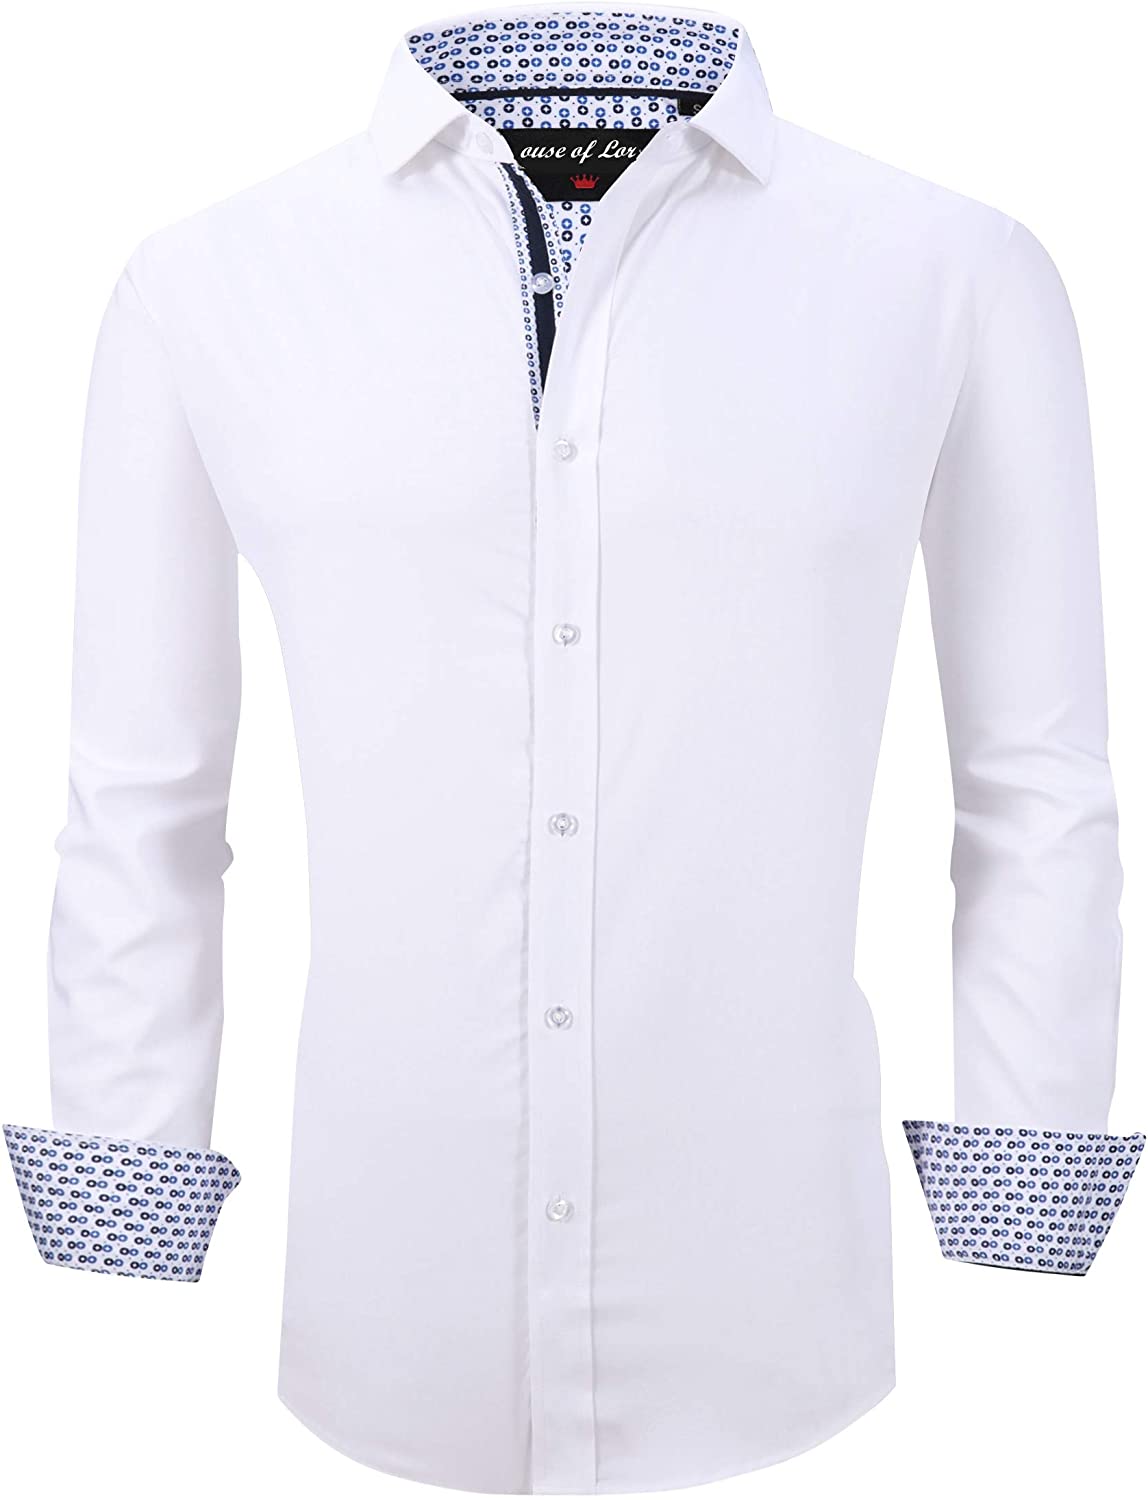 Joey CV Mens Dress Shirts Wrinkle Free Bamboo Fiber Long Sleeve Casual Button Down Shirt 